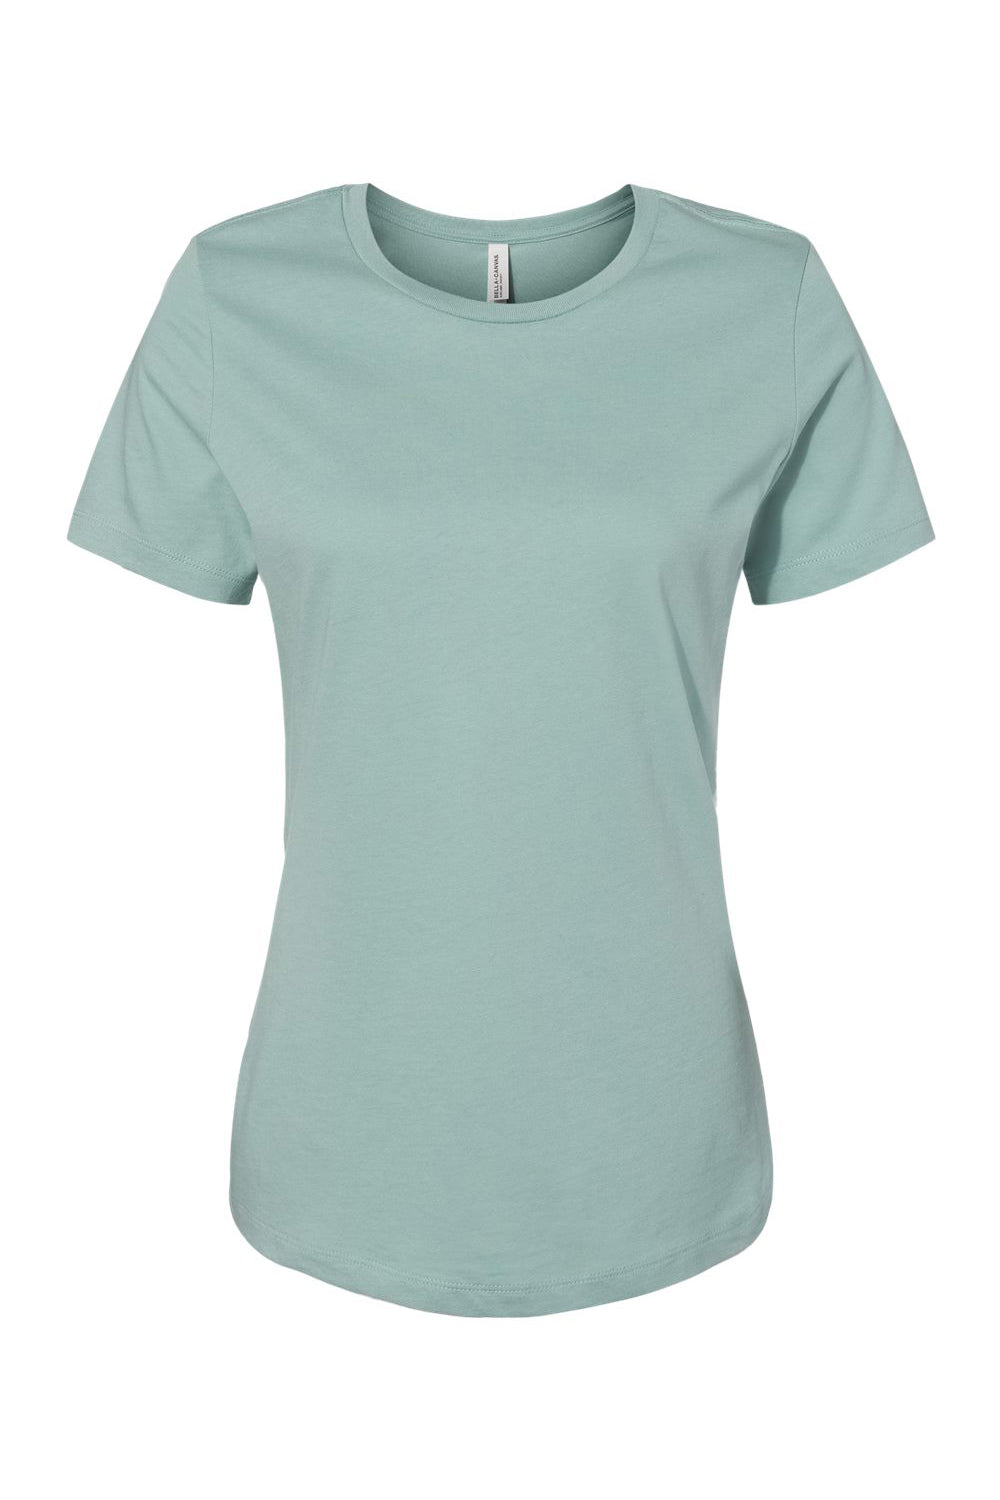 Bella + Canvas BC6400/B6400/6400 Womens Relaxed Jersey Short Sleeve Crewneck T-Shirt Dusty Blue Flat Front